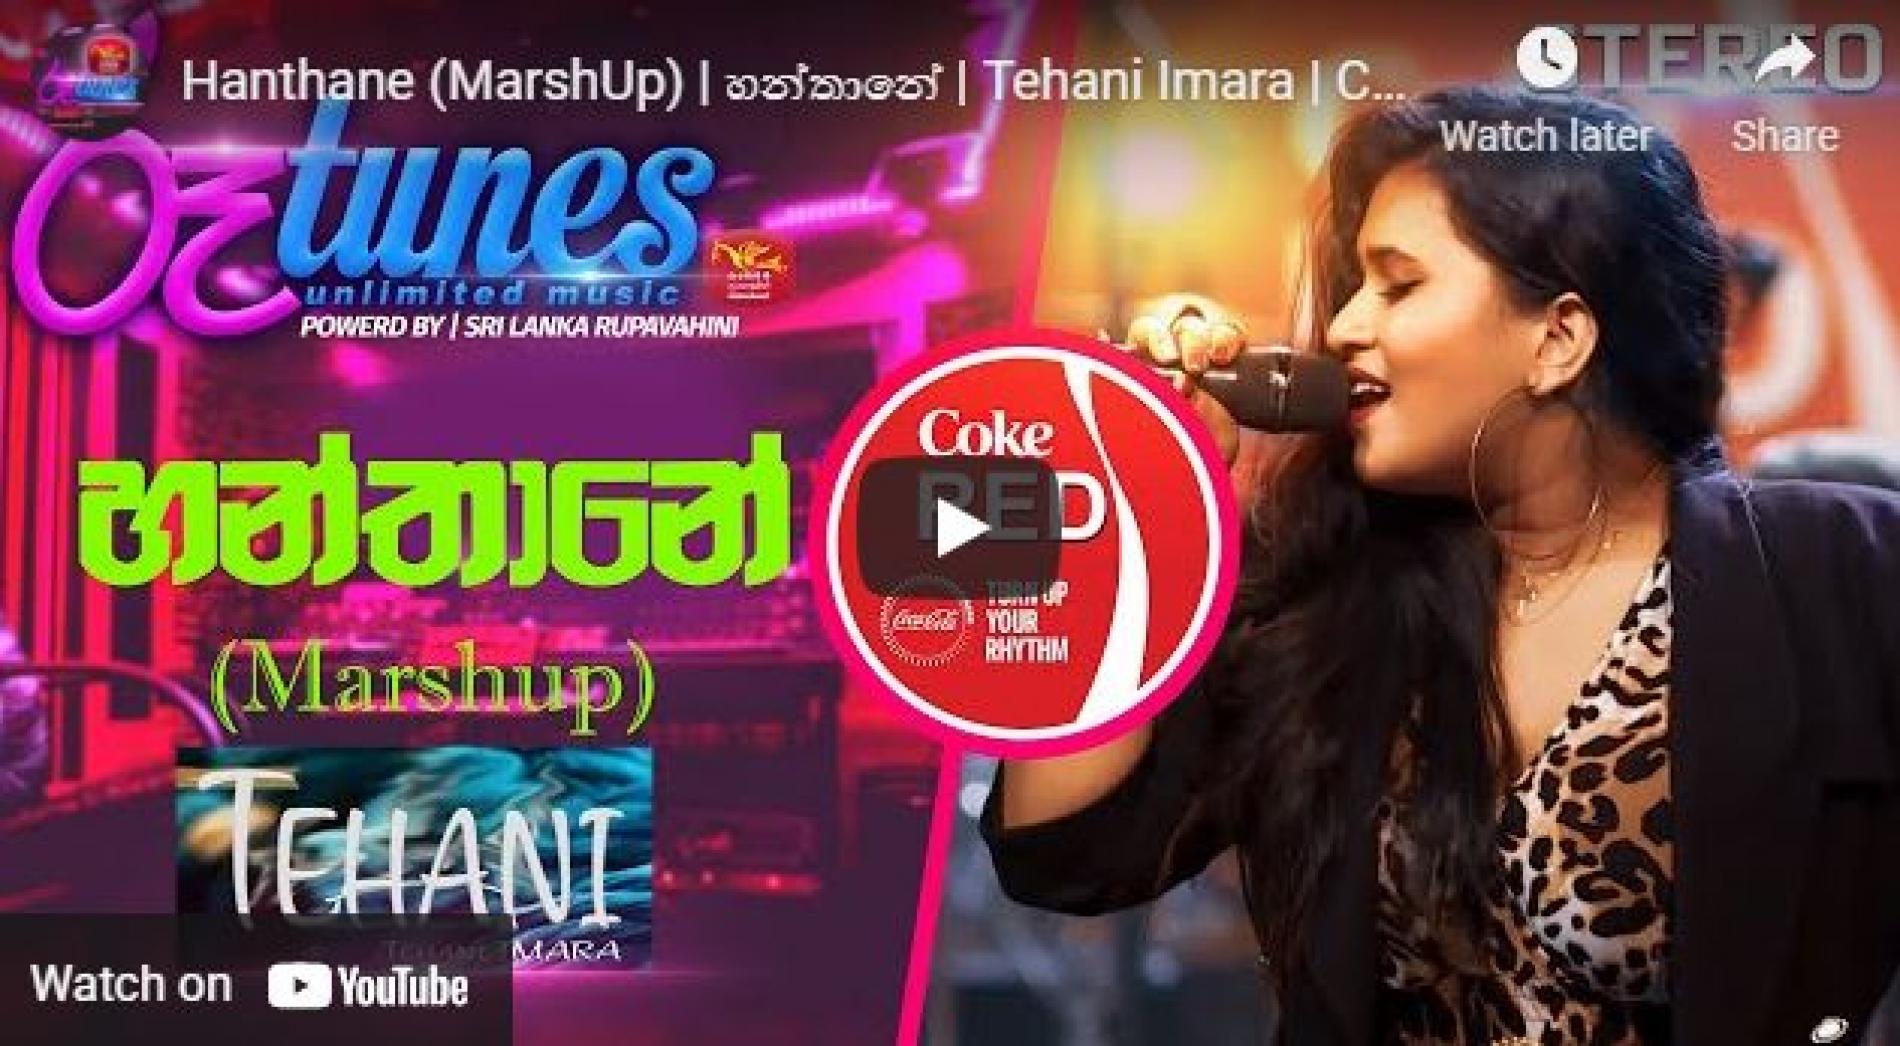 New Music : Hanthane (MashUp) | හන්තානේ | Tehani Imara